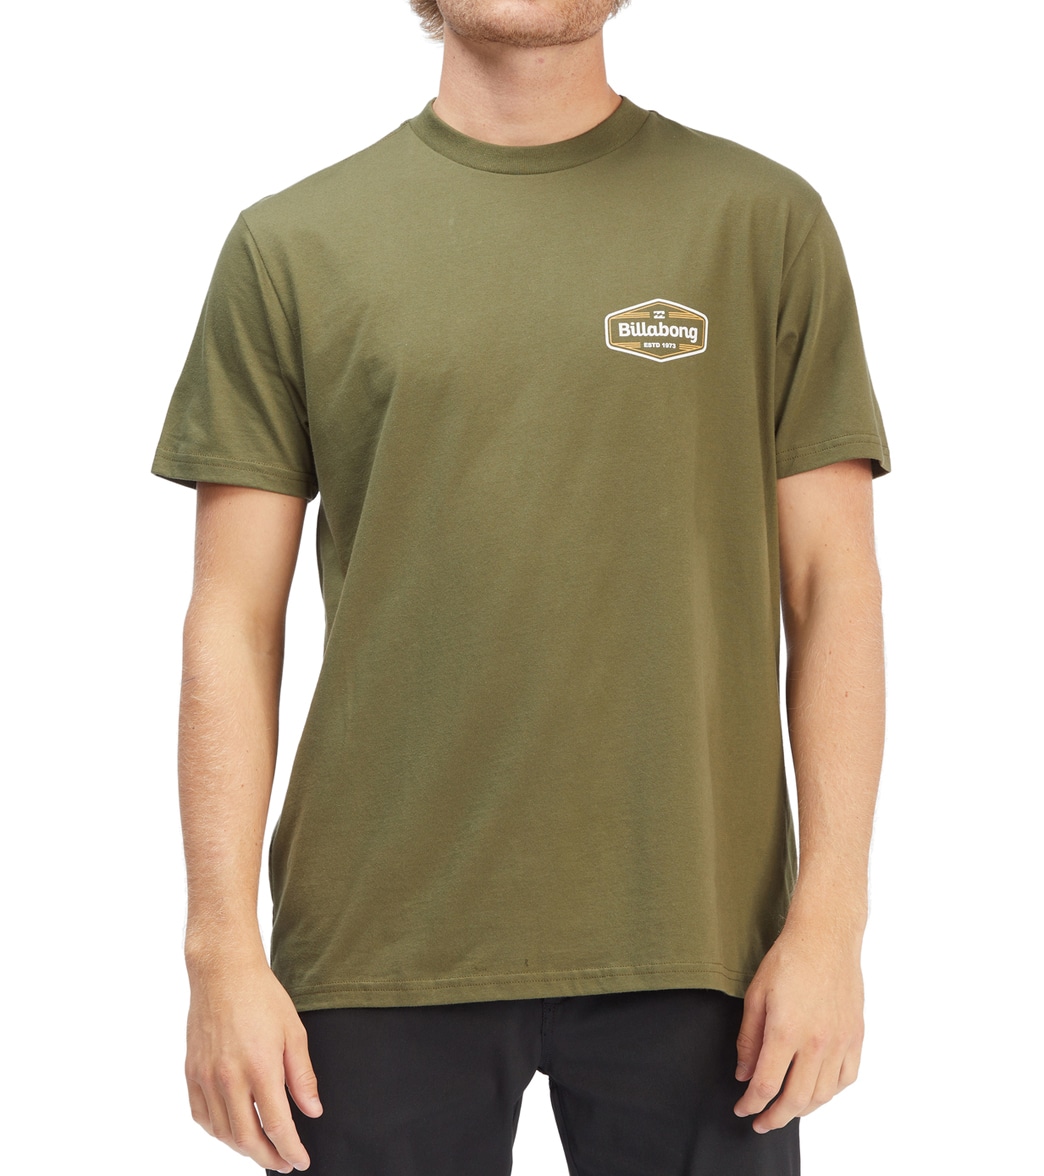 Billabong Men's Walled Short Sleeve Tee Shirt - Military Large Cotton - Swimoutlet.com